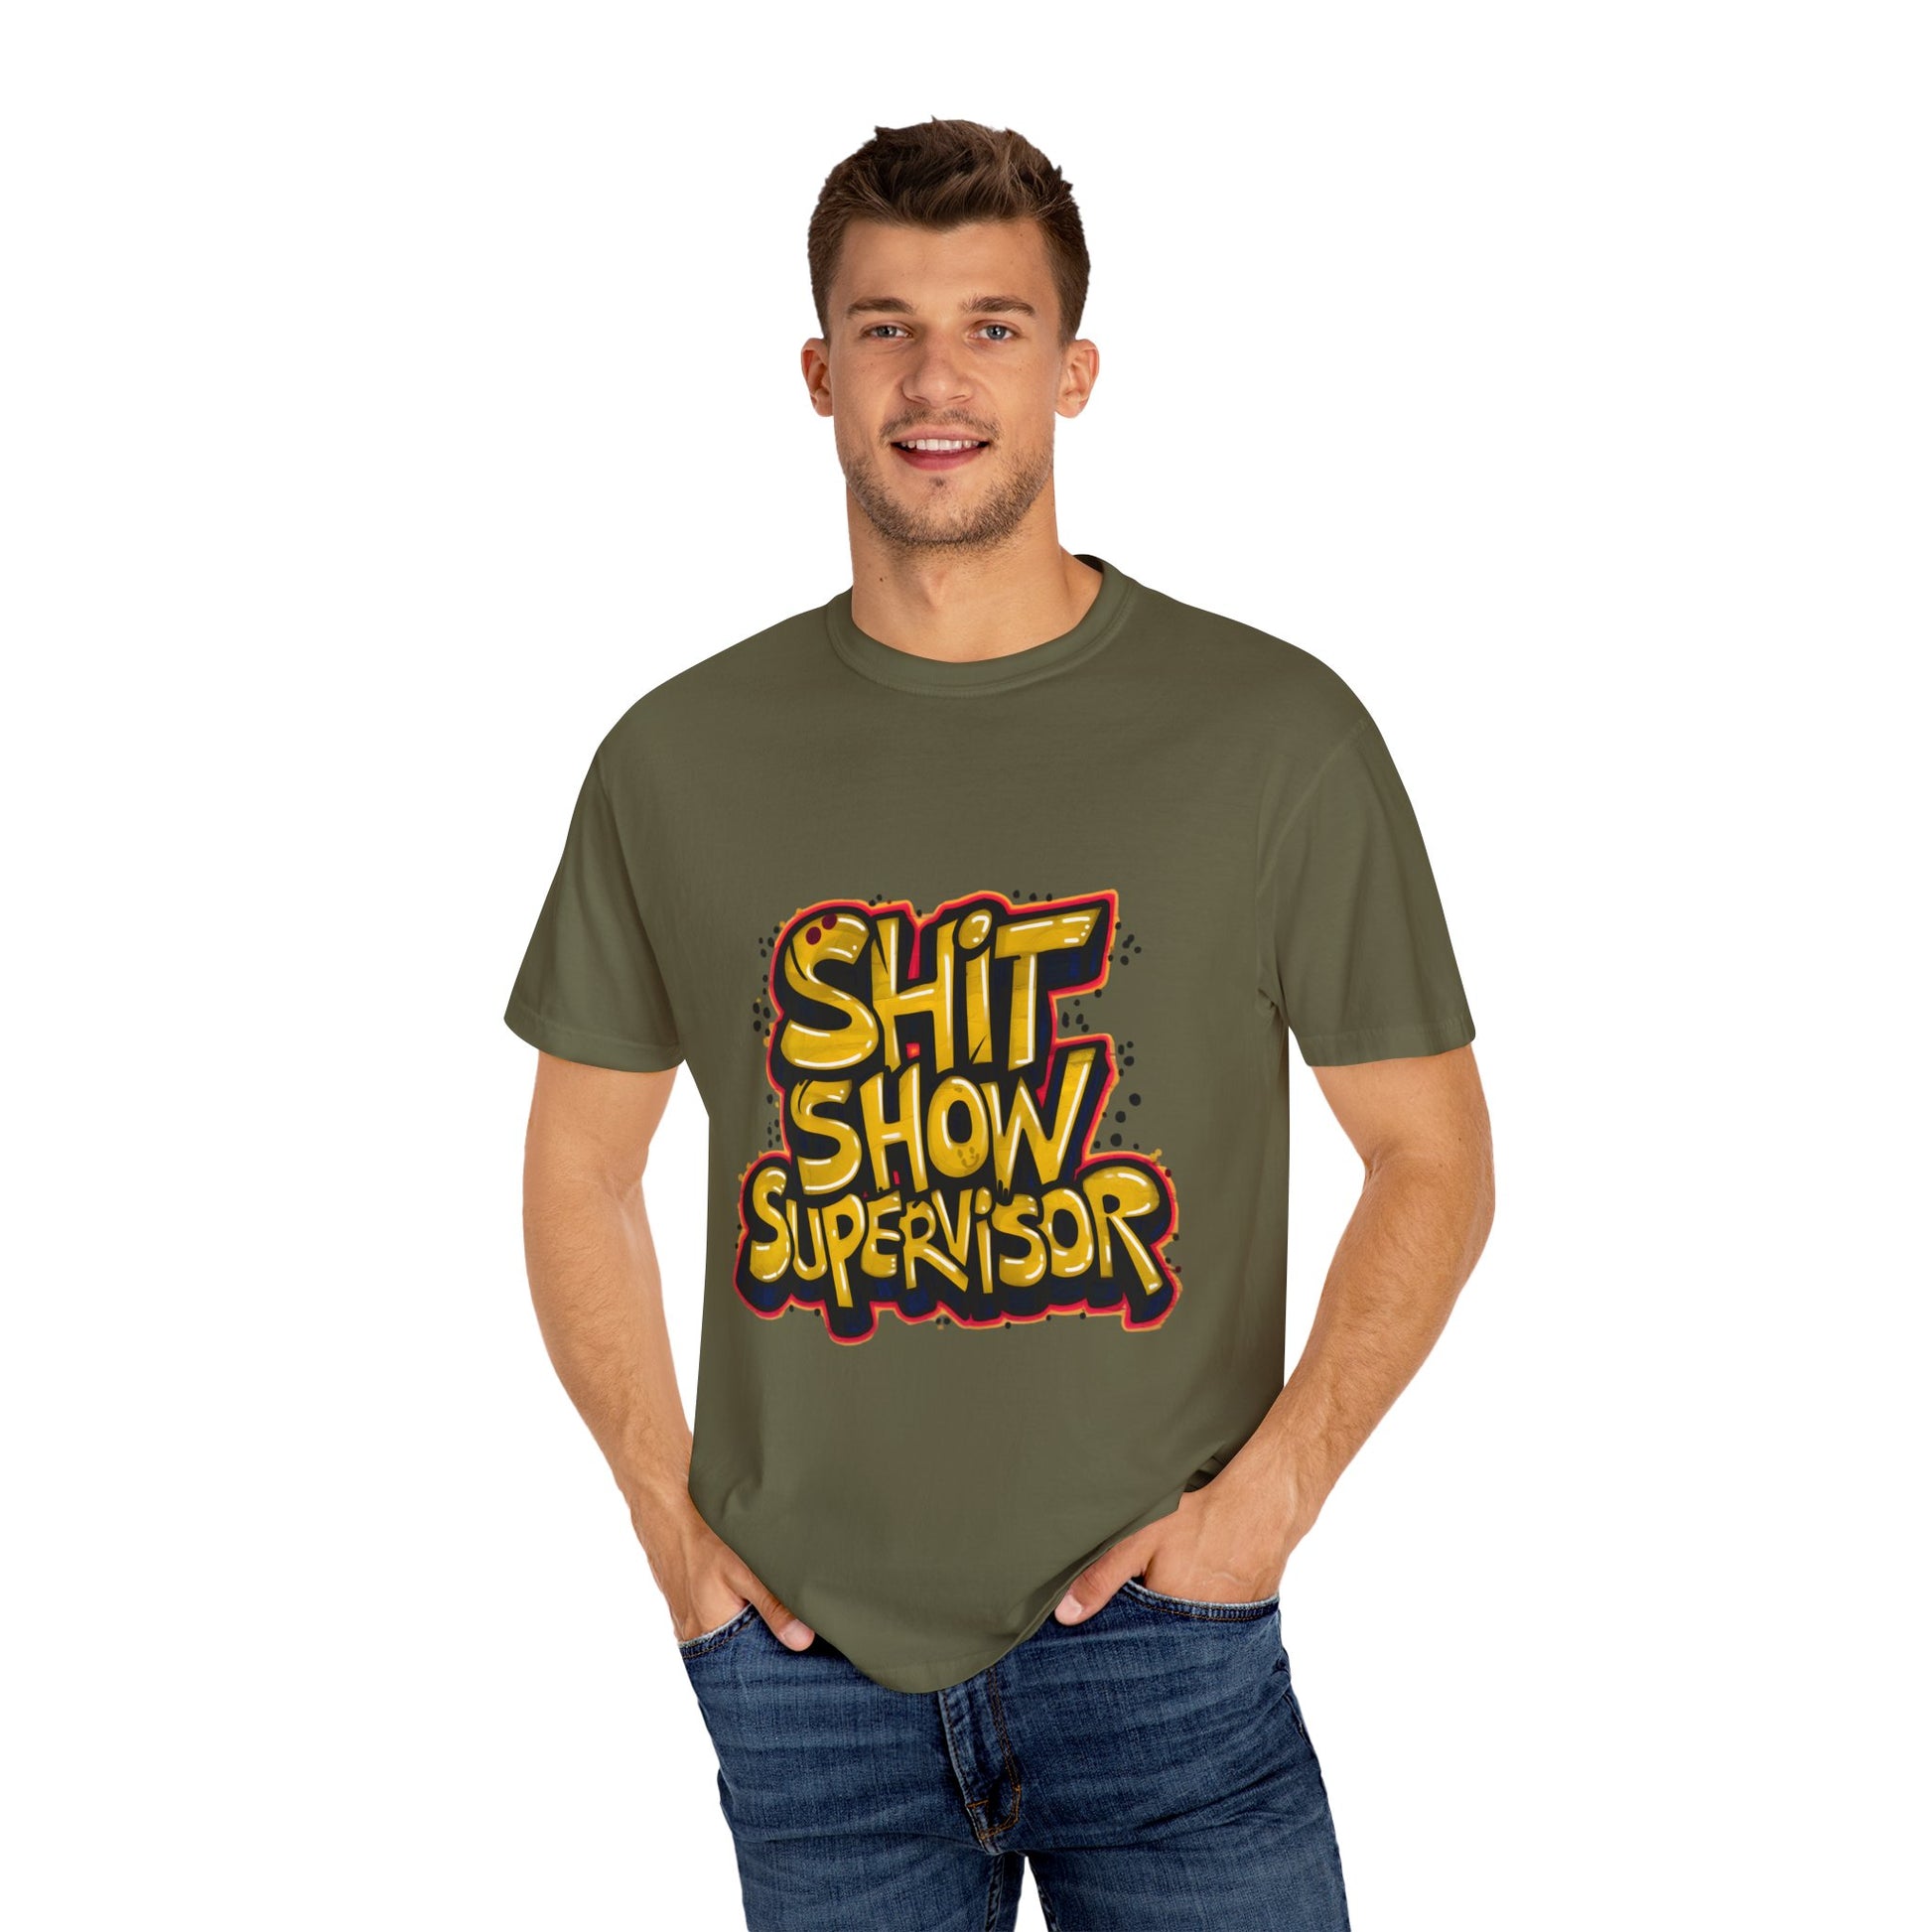 Shit Show Supervisor Urban Sarcastic Graphic Unisex Garment Dyed T-shirt Cotton Funny Humorous Graphic Soft Premium Unisex Men Women Sage T-shirt Birthday Gift-54